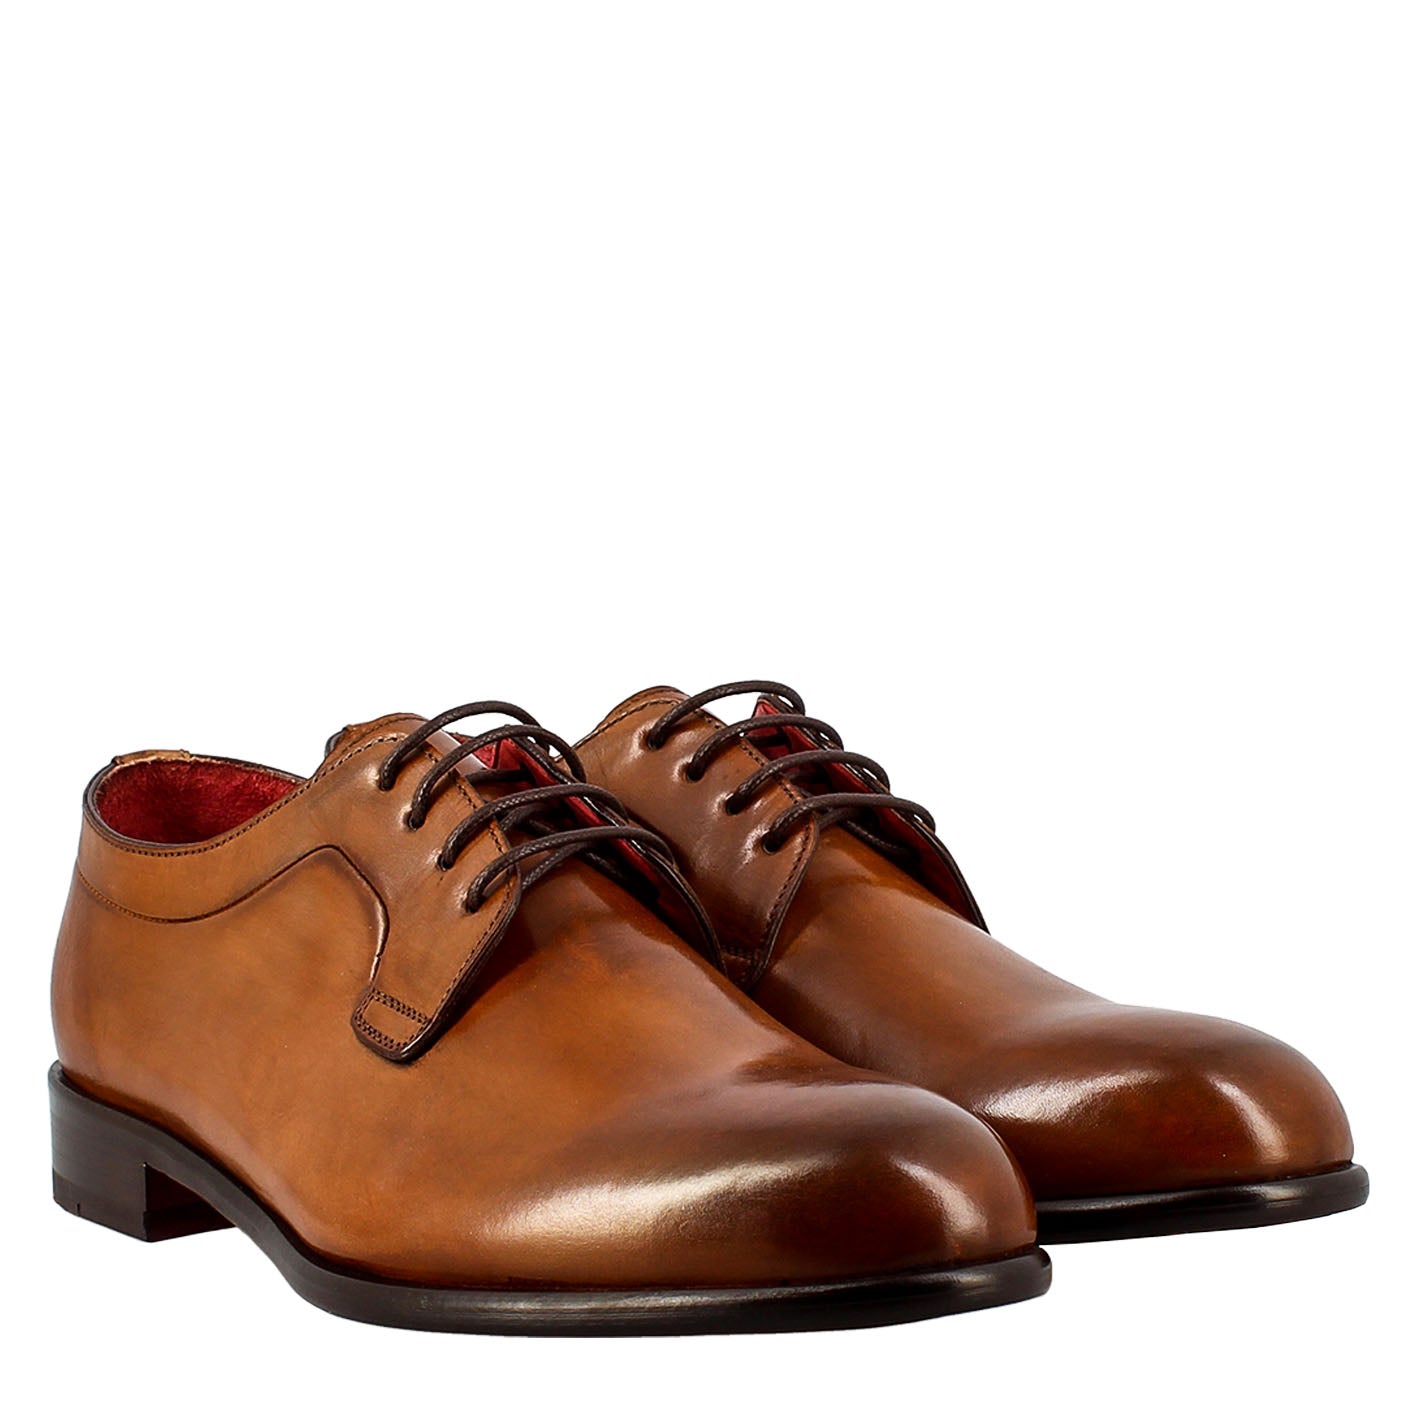 Elegant brown derby for men in smooth leather